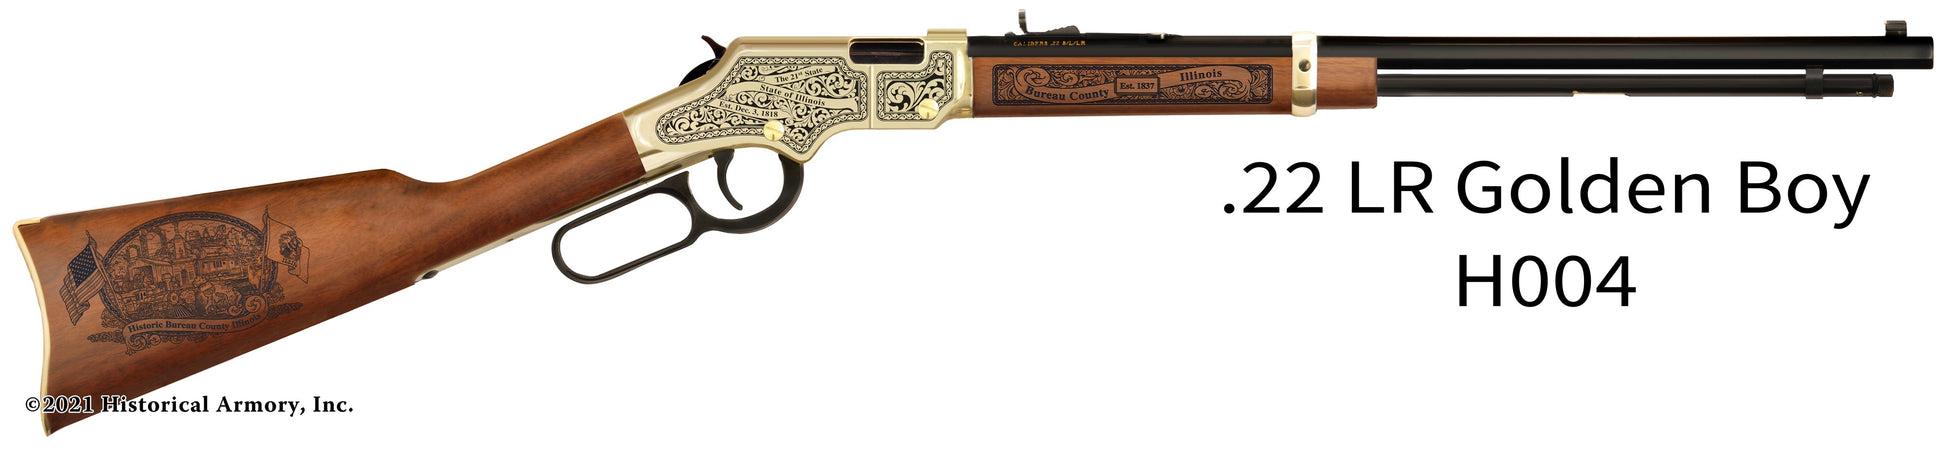 Bureau County Illinois History Engraved  Rifle Henry Golden Boy .22 | Historical Armory